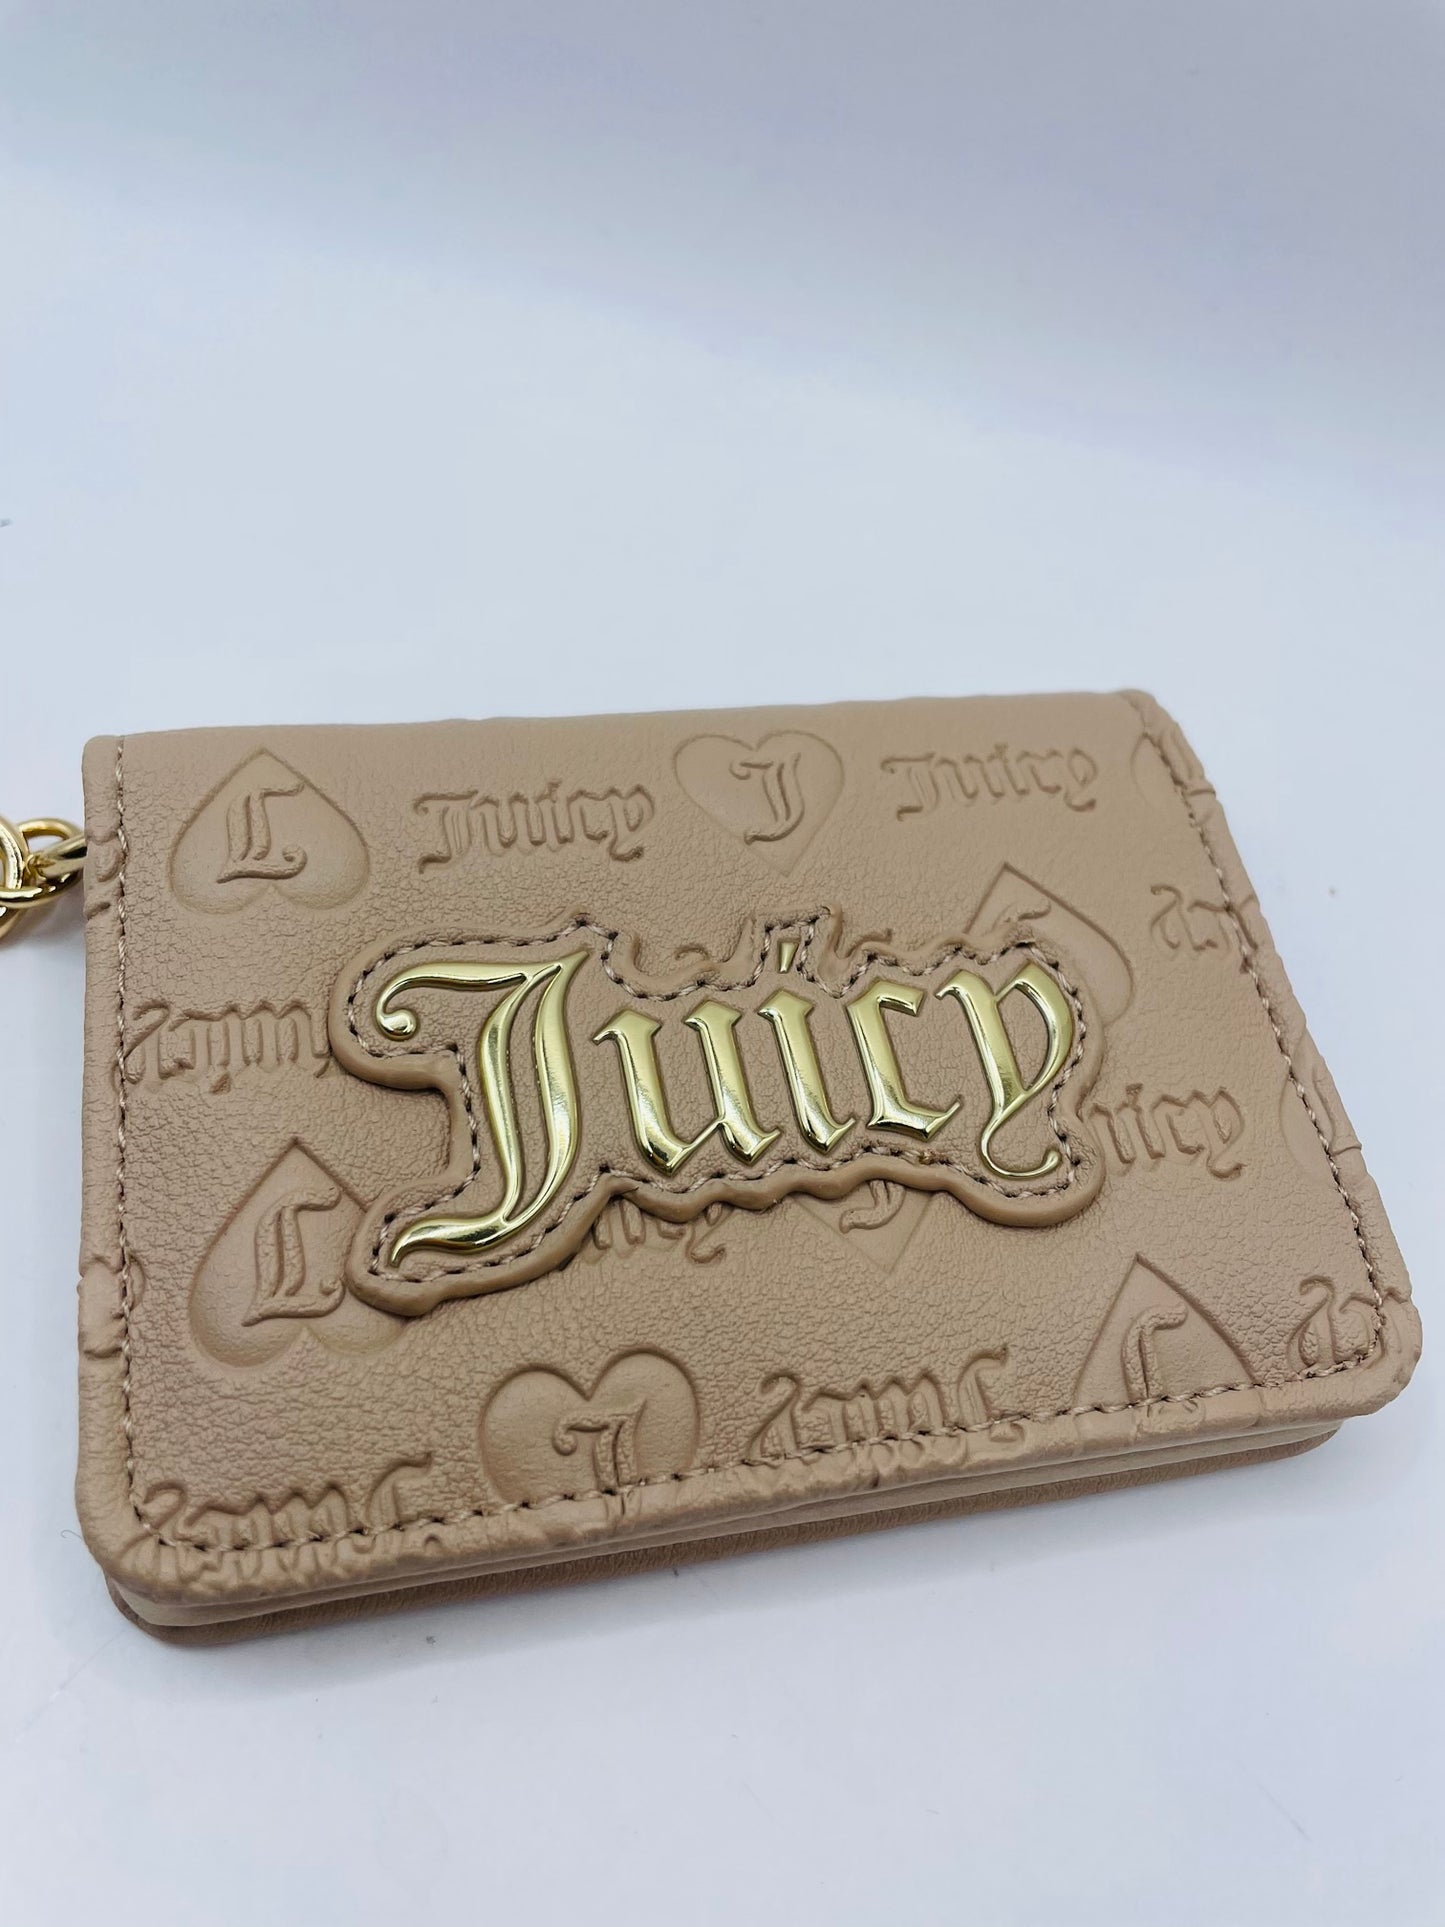 Juicy couture wallet